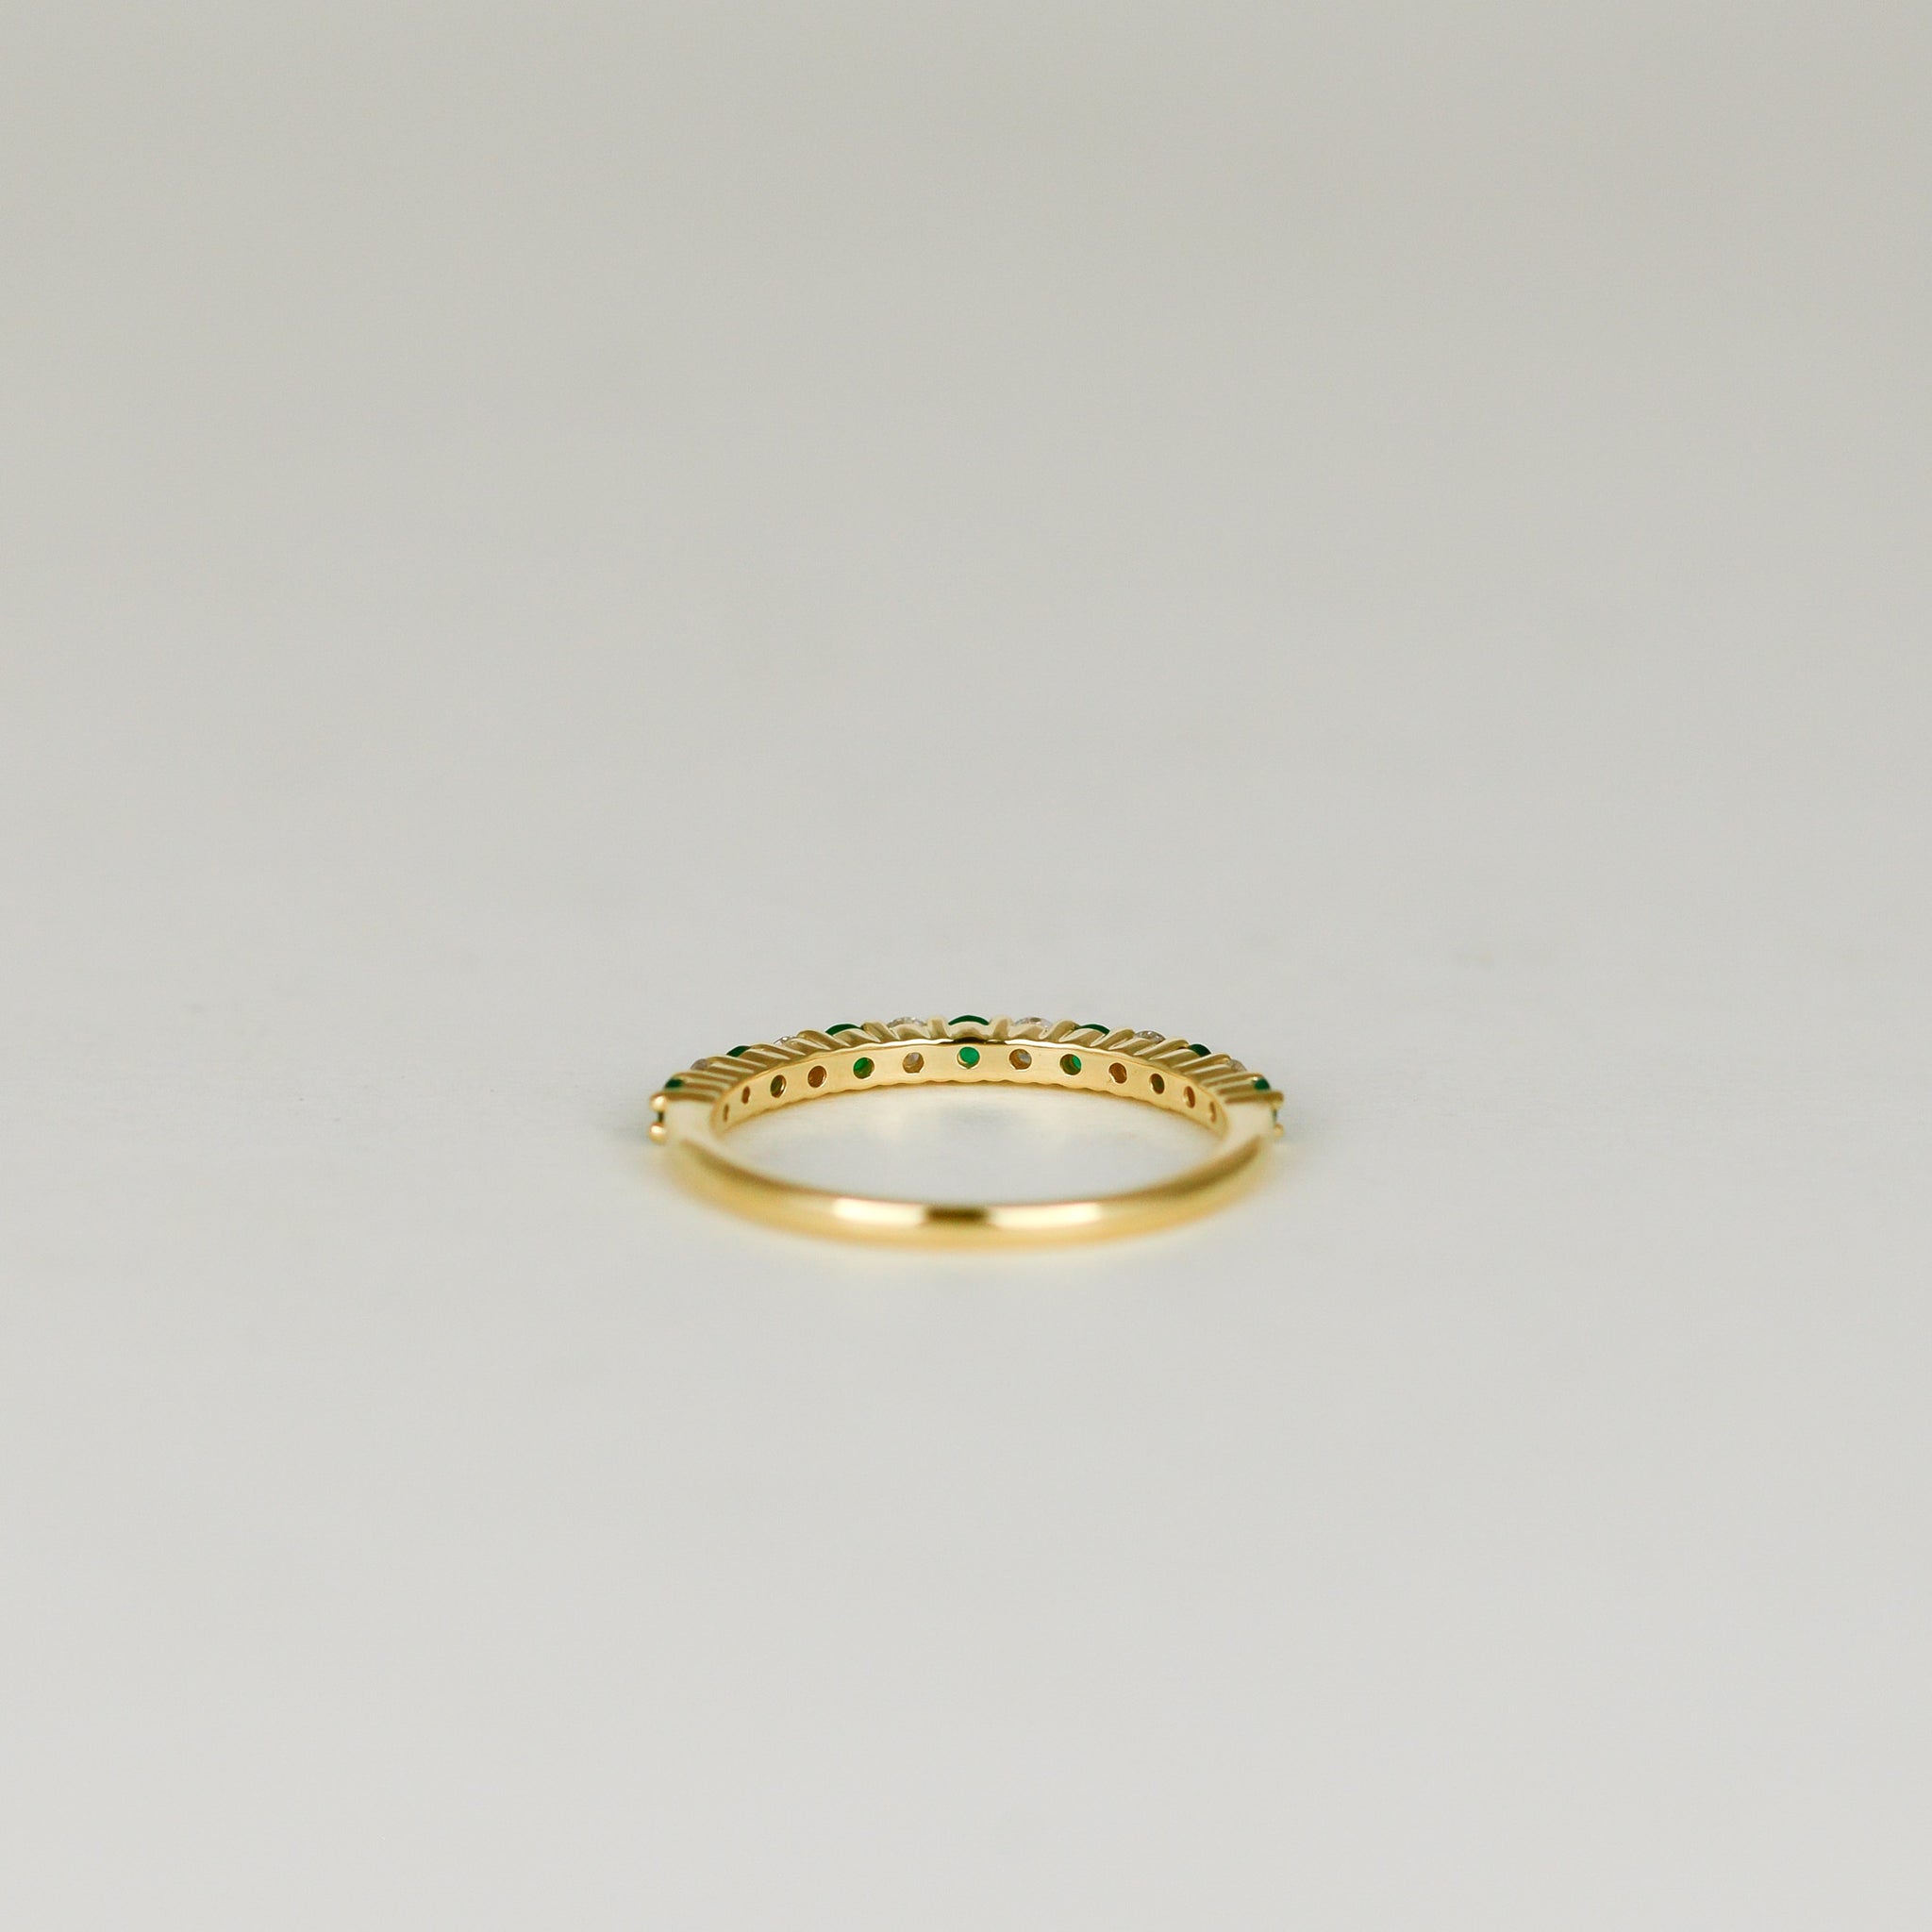 18ct Yellow Gold 0.20ct Round Emerald and Diamond Half Eternity Ring